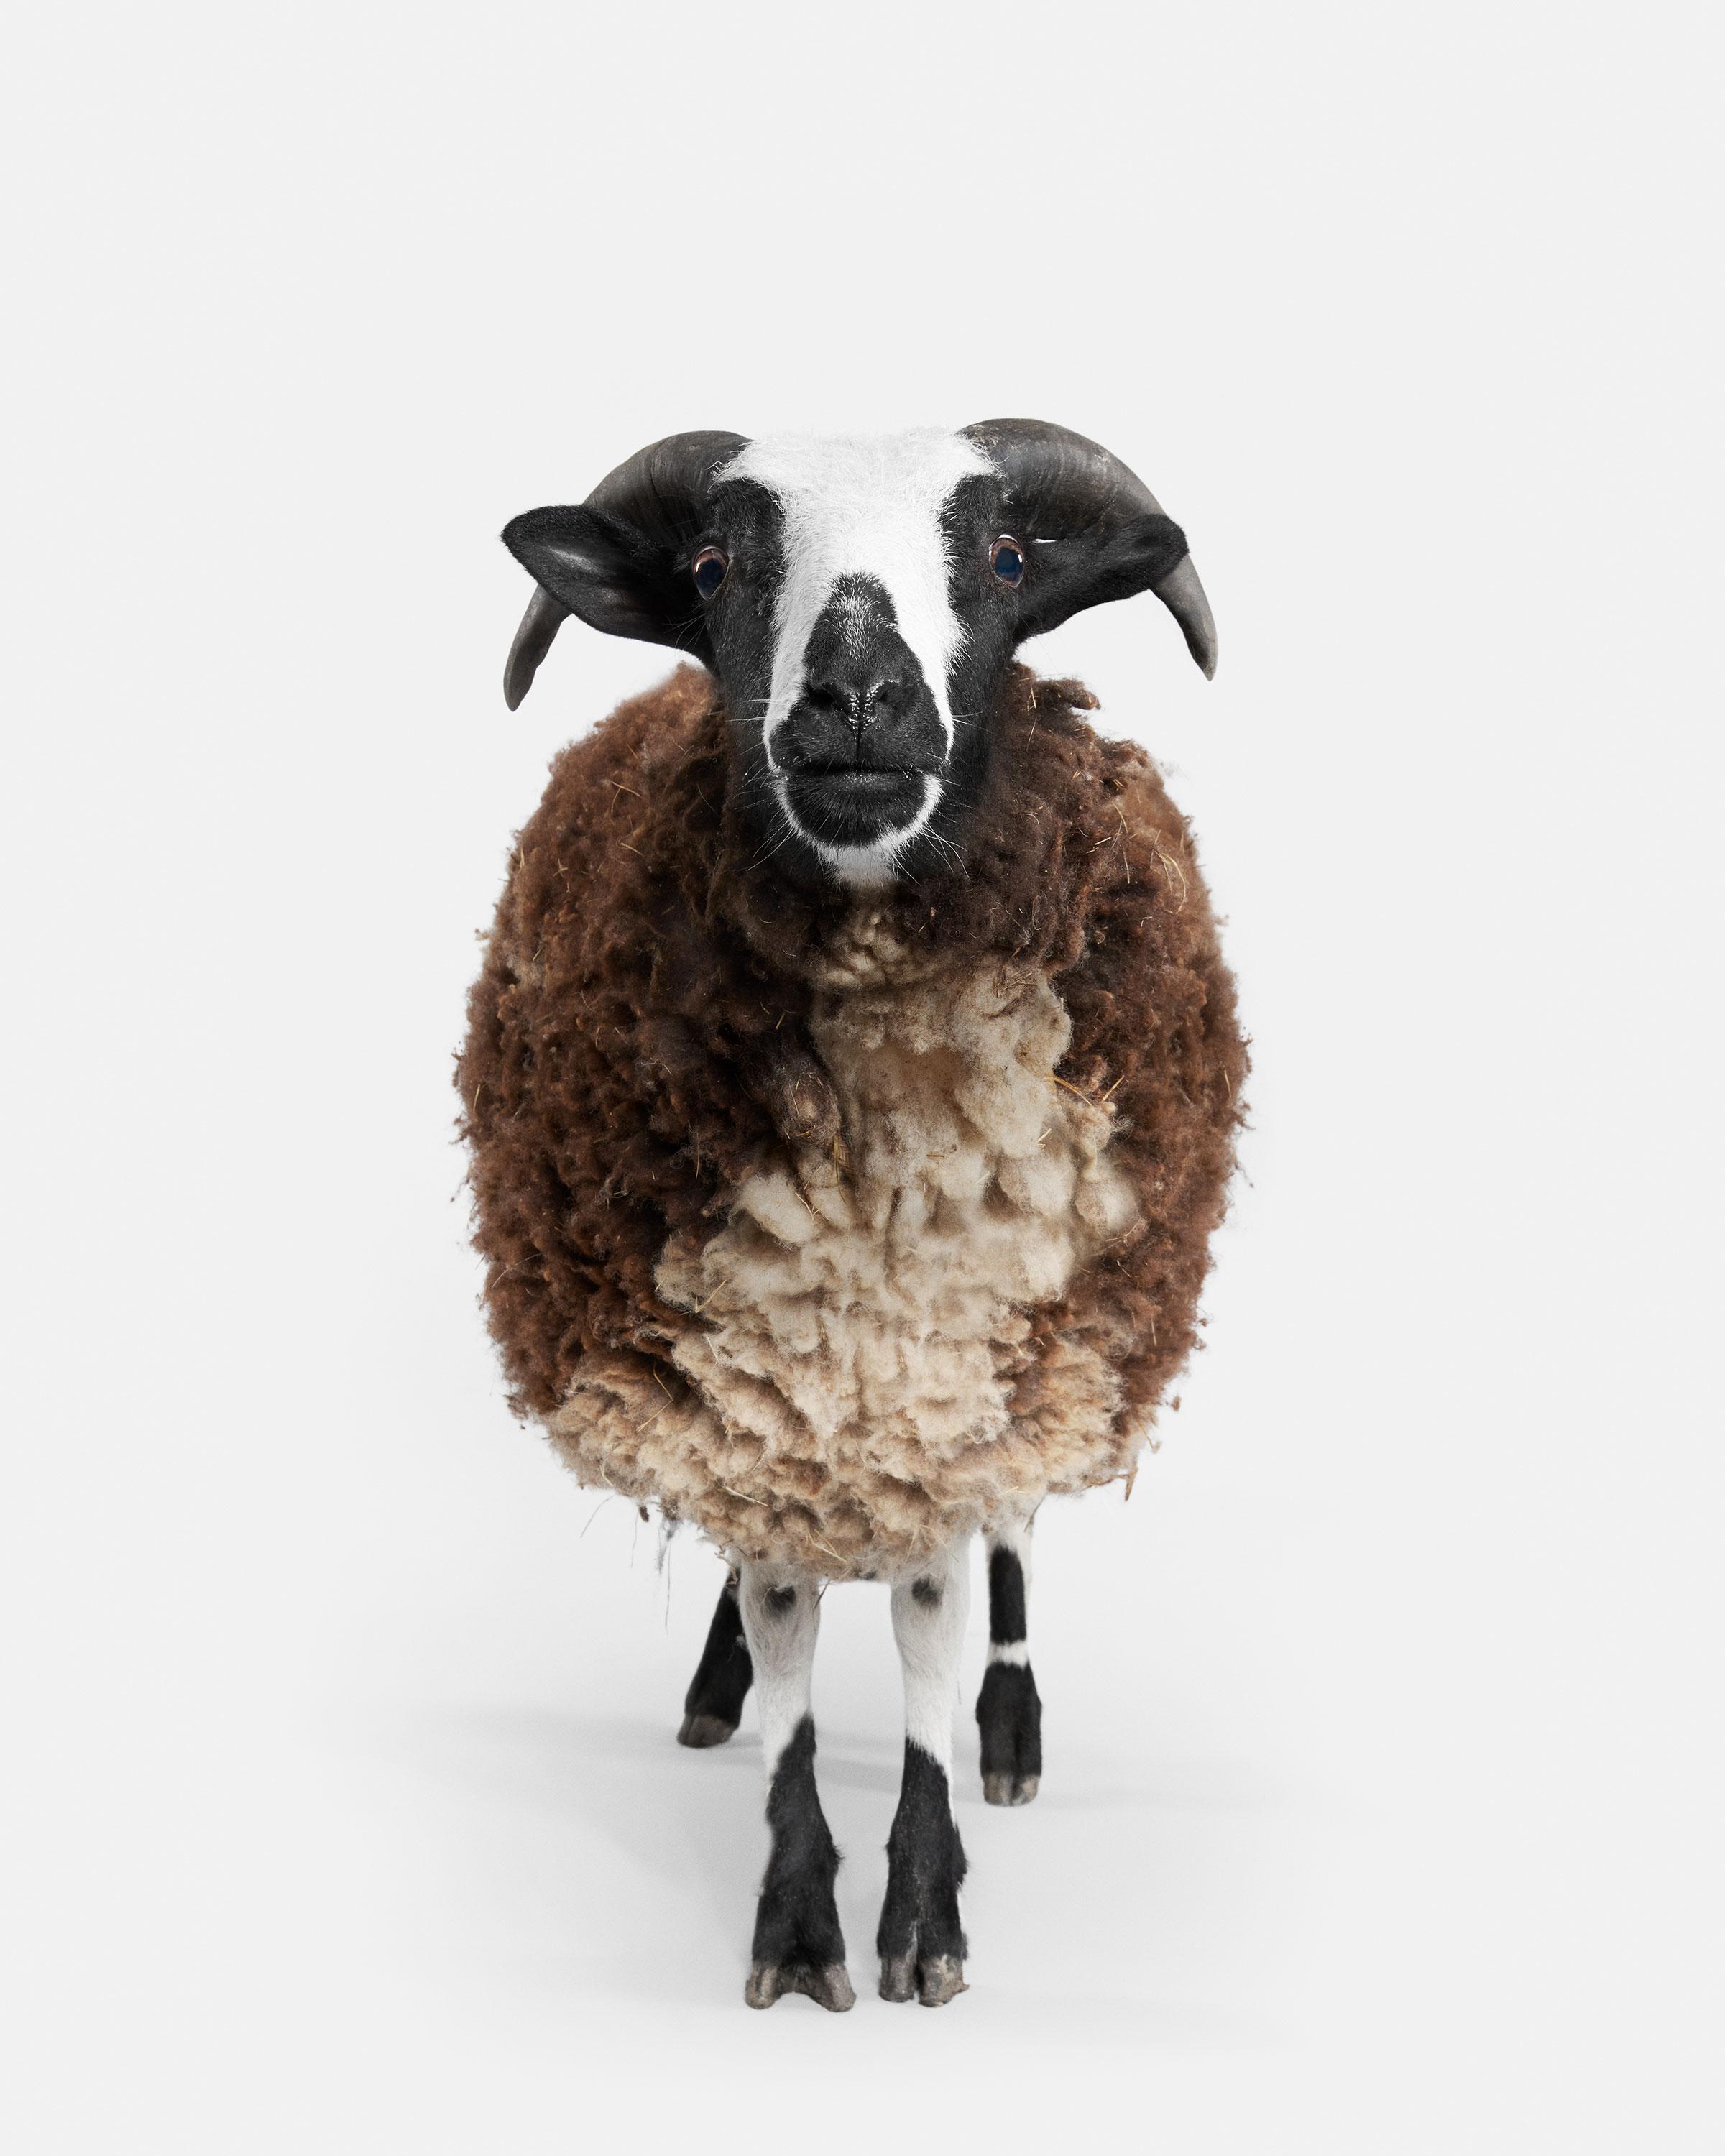 Randal Ford Animal Print - Jacob Sheep No. 2 (60" x 48")